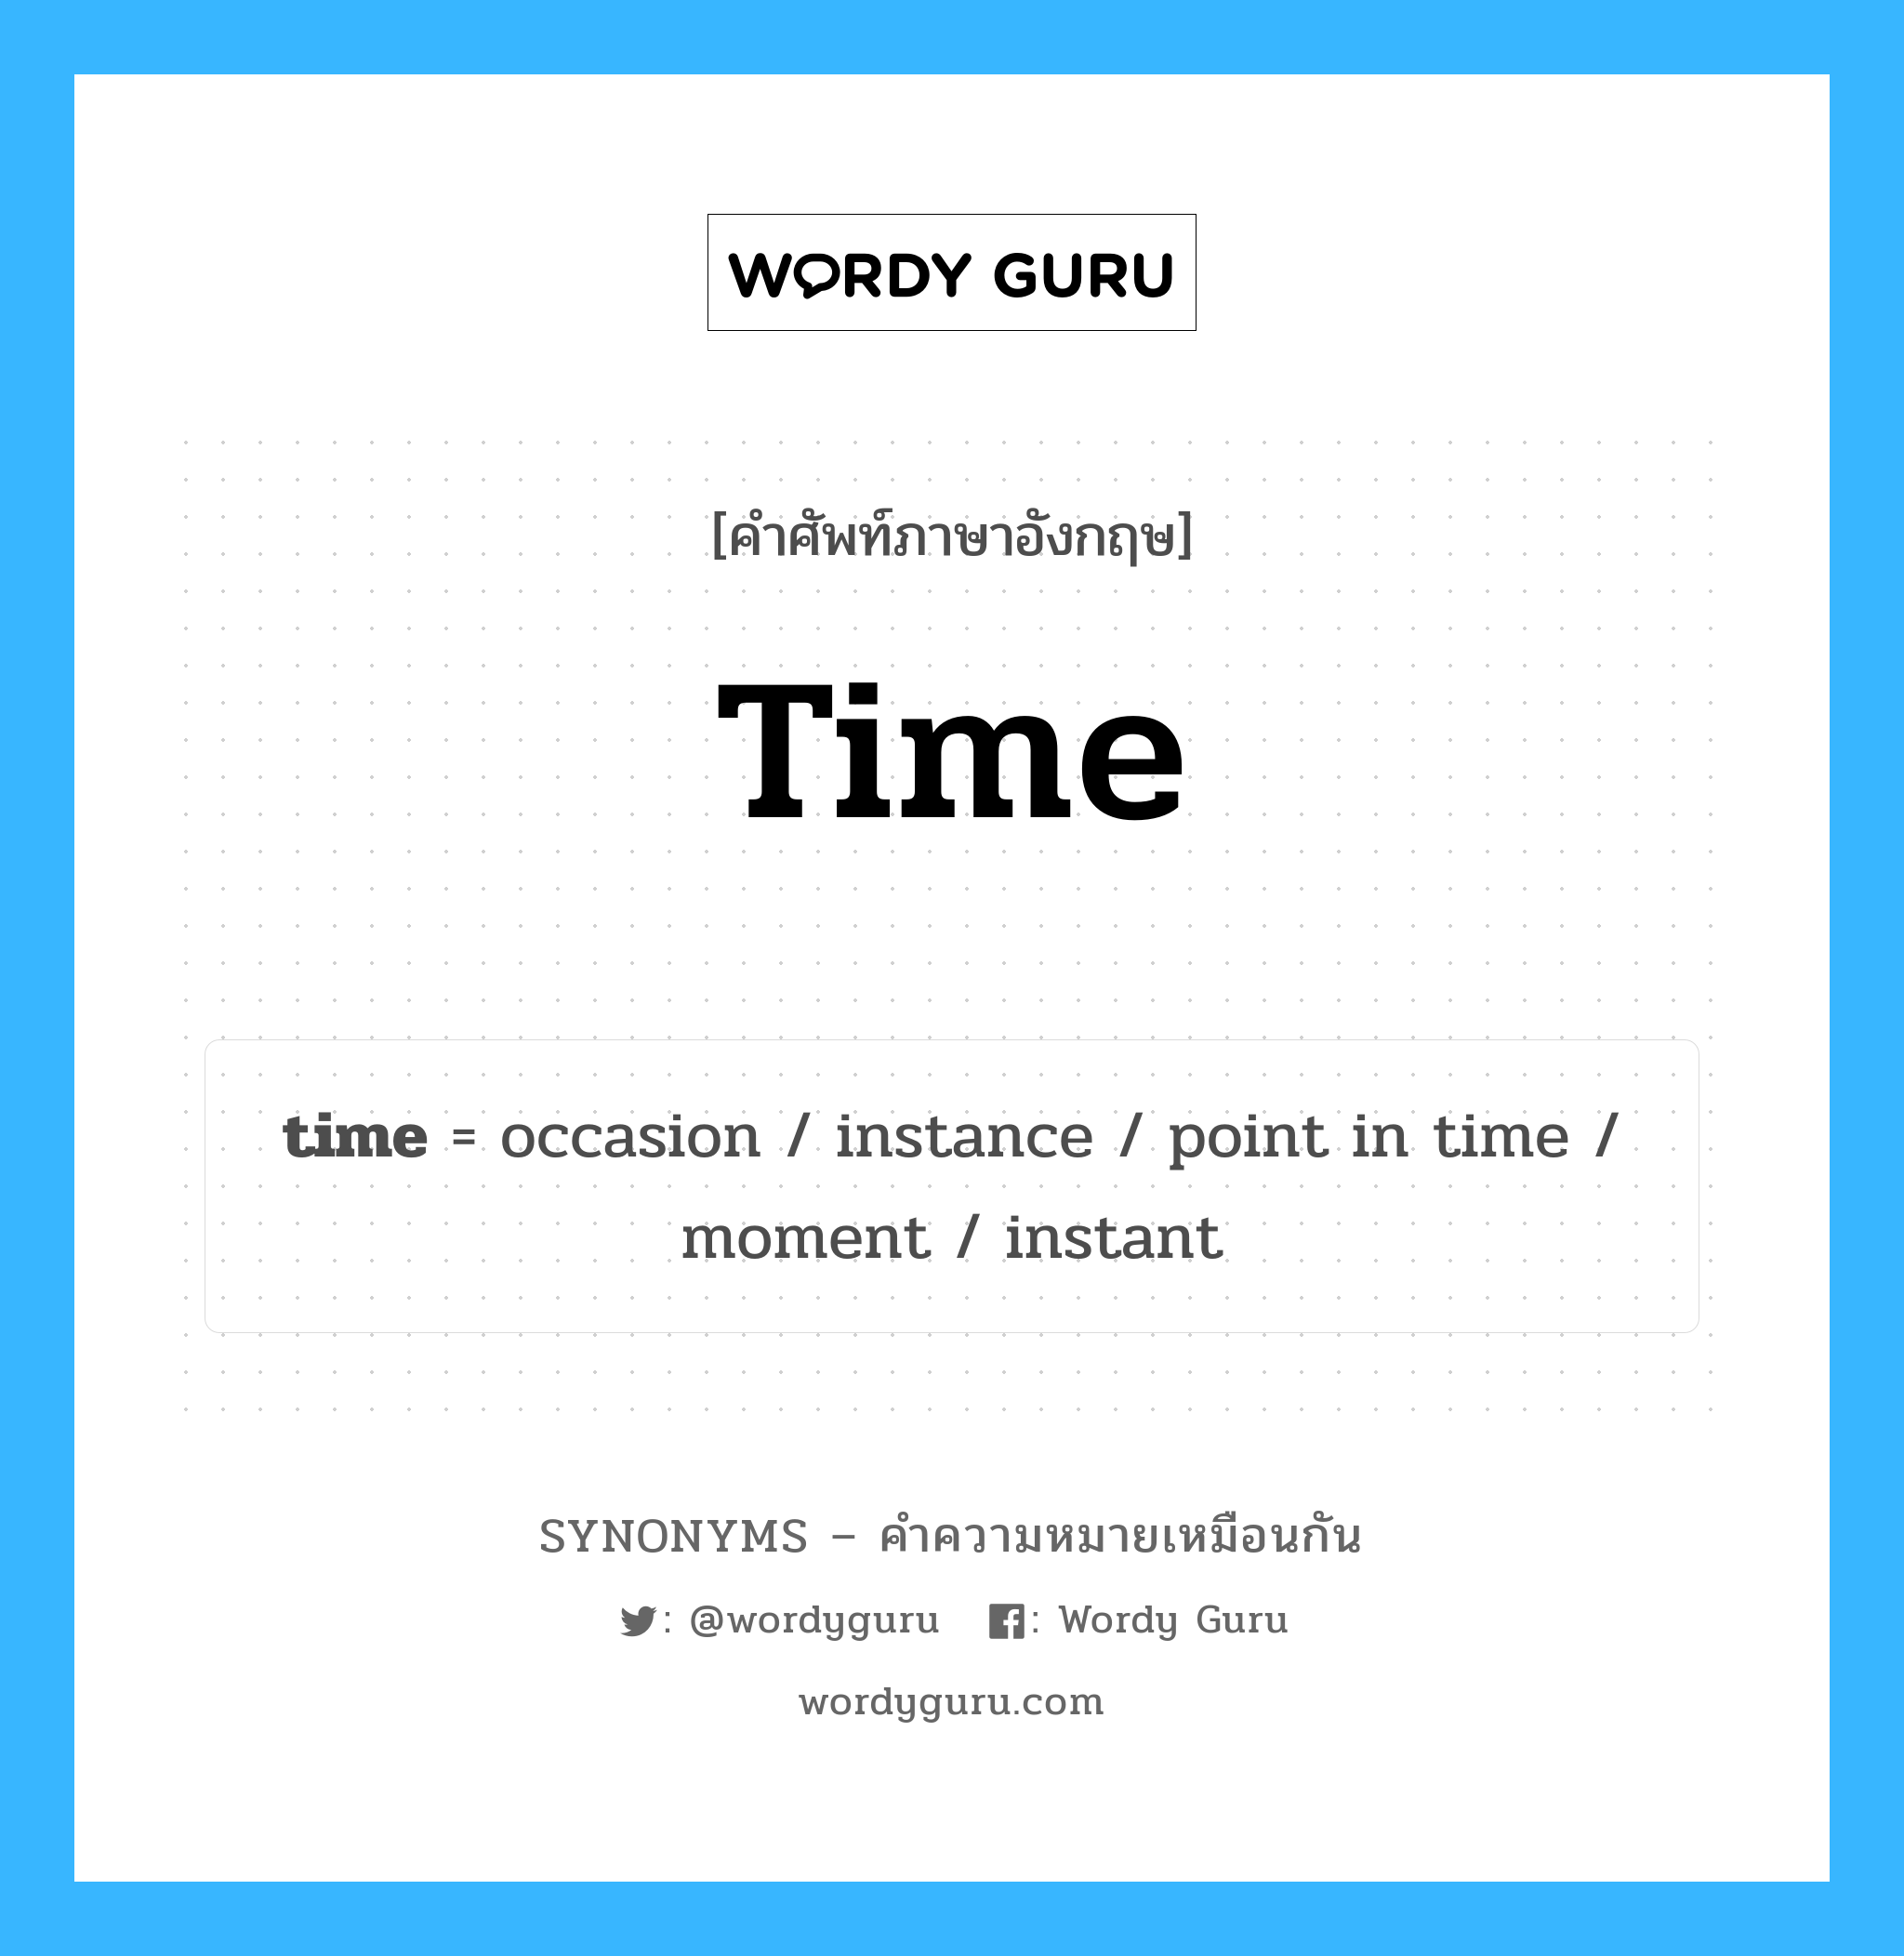 occasion เป็นหนึ่งใน time และมีคำอื่น ๆ อีกดังนี้, คำศัพท์ภาษาอังกฤษ occasion ความหมายคล้ายกันกับ time แปลว่า โอกาส หมวด time